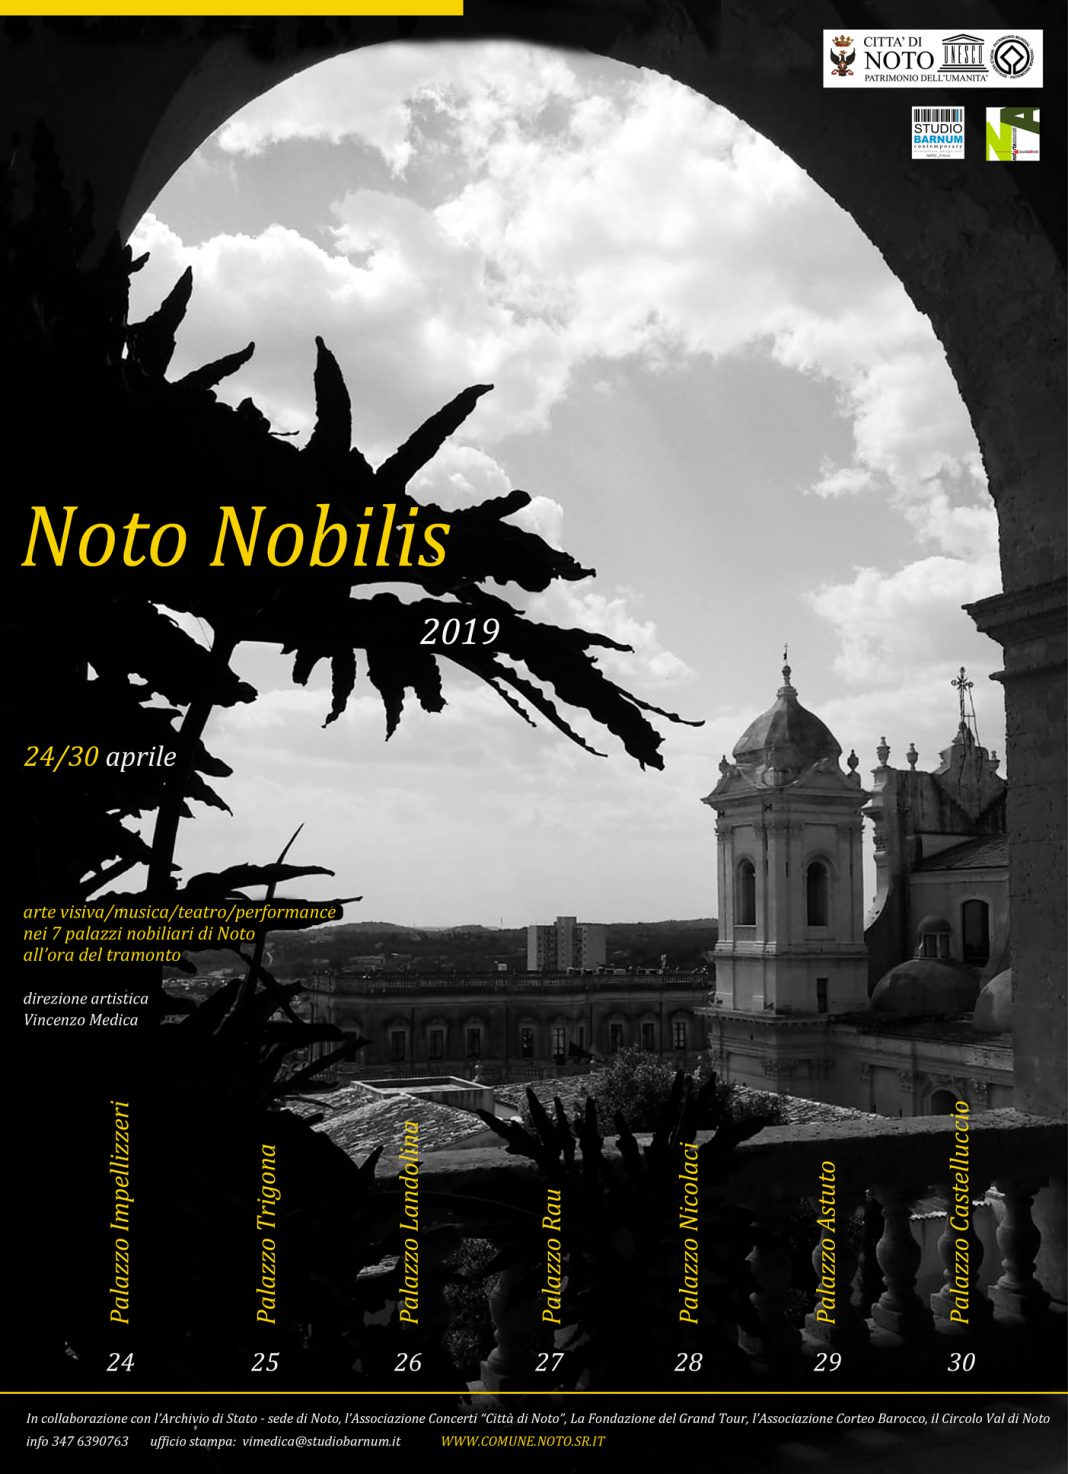 NotoNobilis 2019https://www.exibart.com/repository/media/eventi/2019/04/notonobilis-2019-1068x1474.jpg